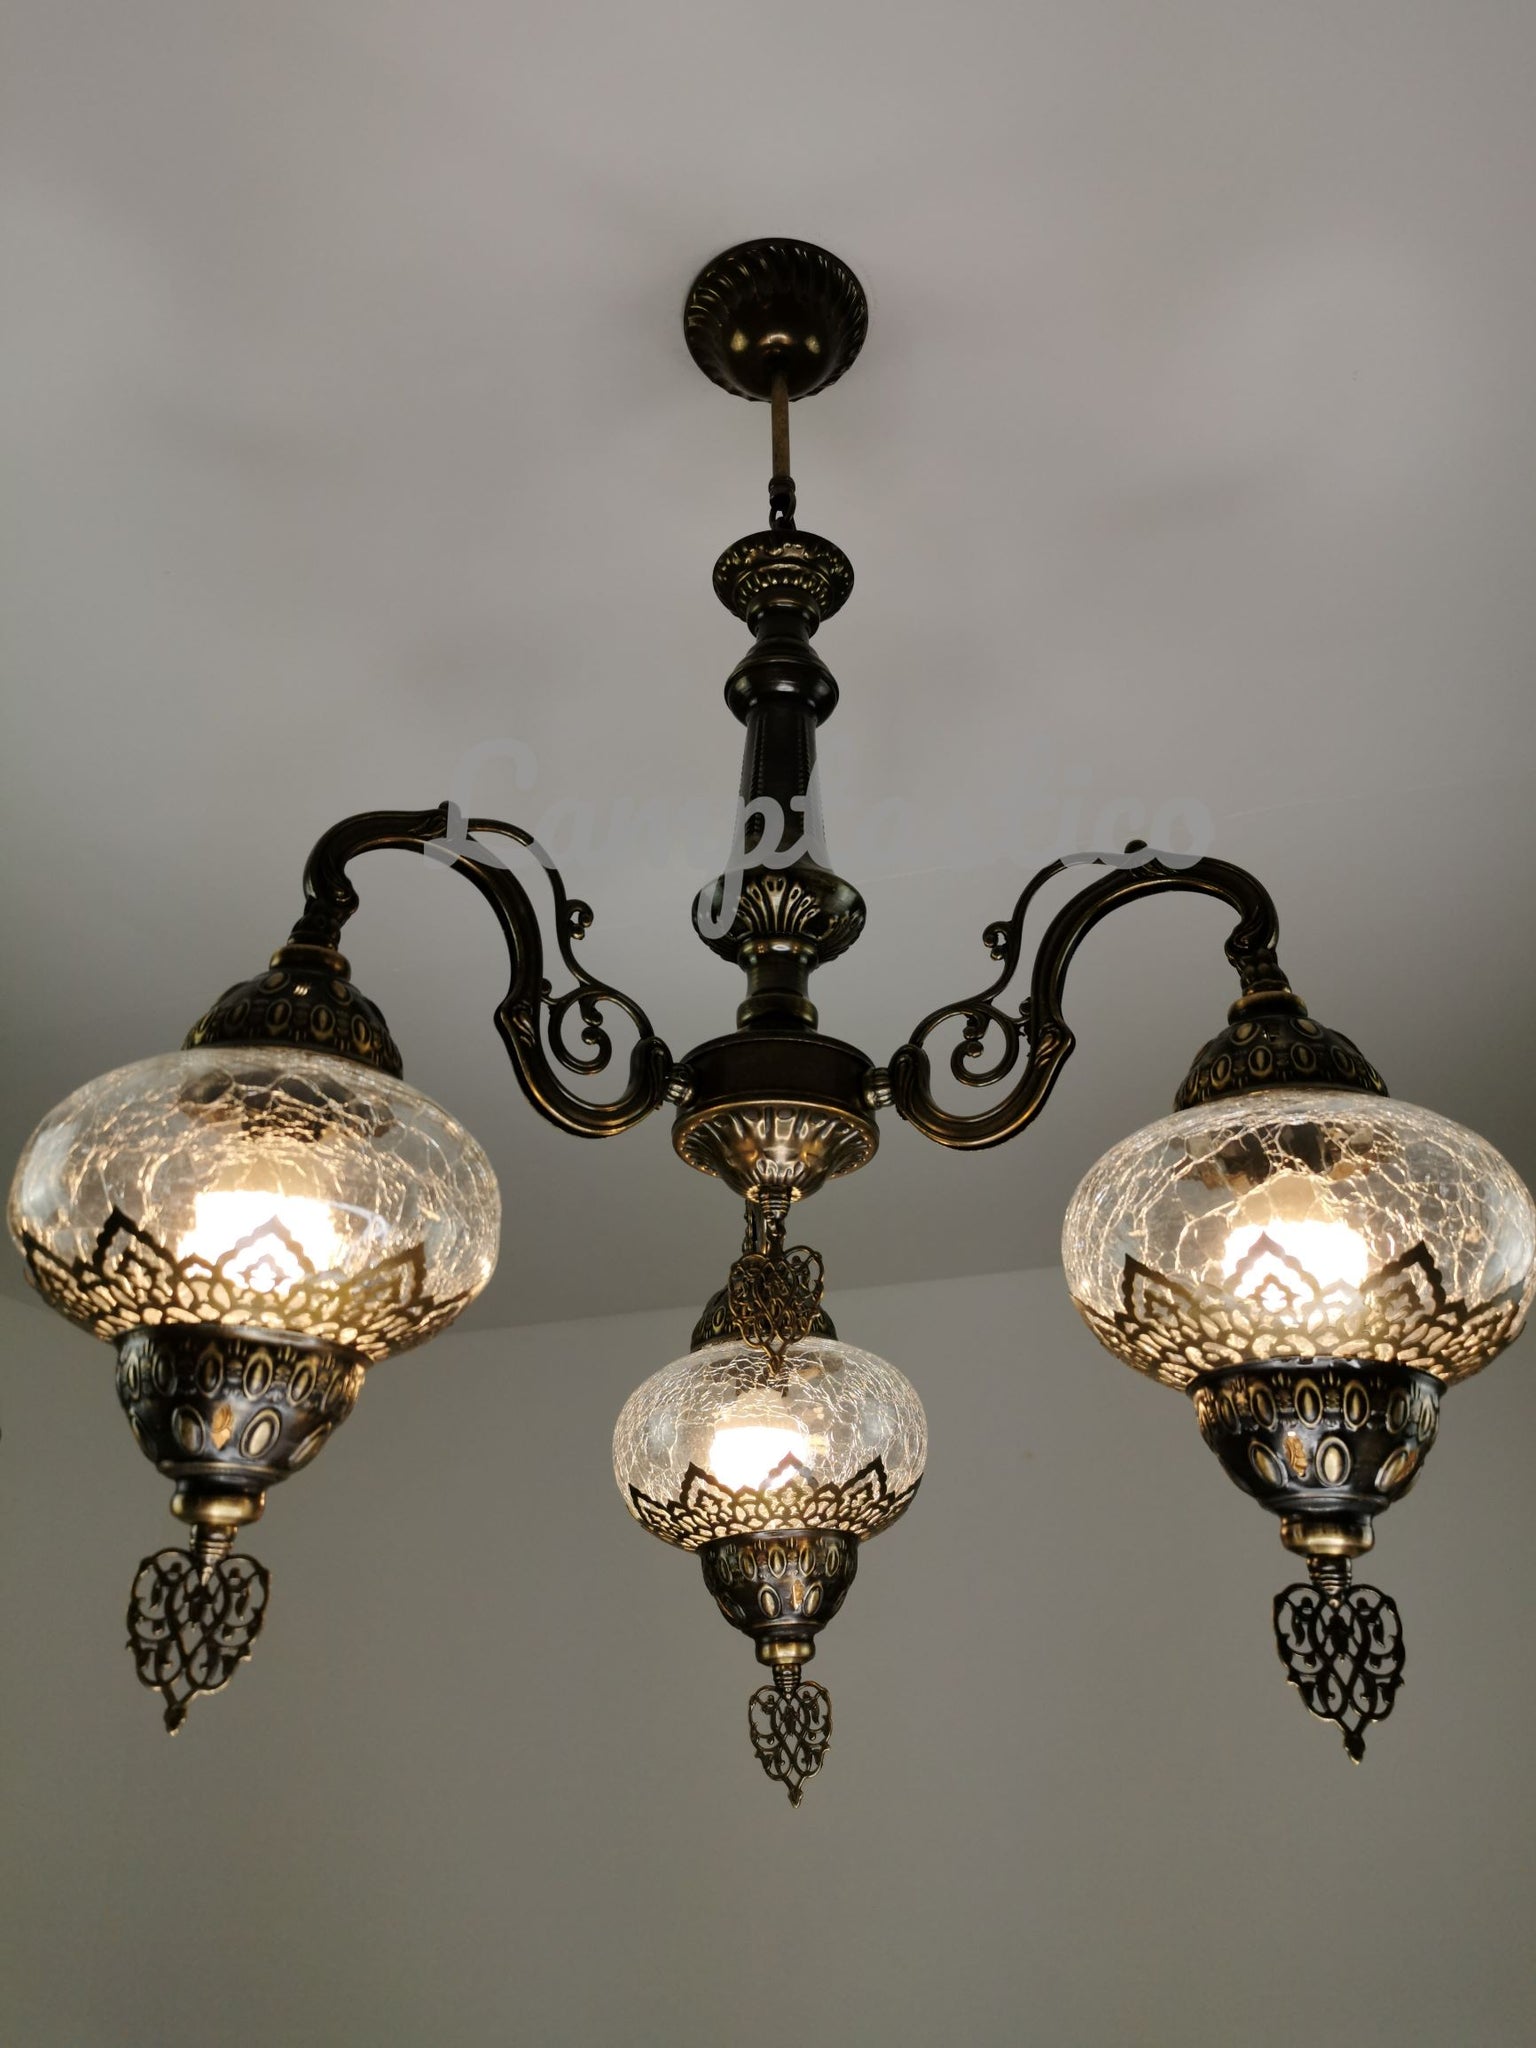 Turkish Crackled Glass Chandelier, Ceiling Light, Pendant, Lighting Fixture, 3 Globe Chandelier